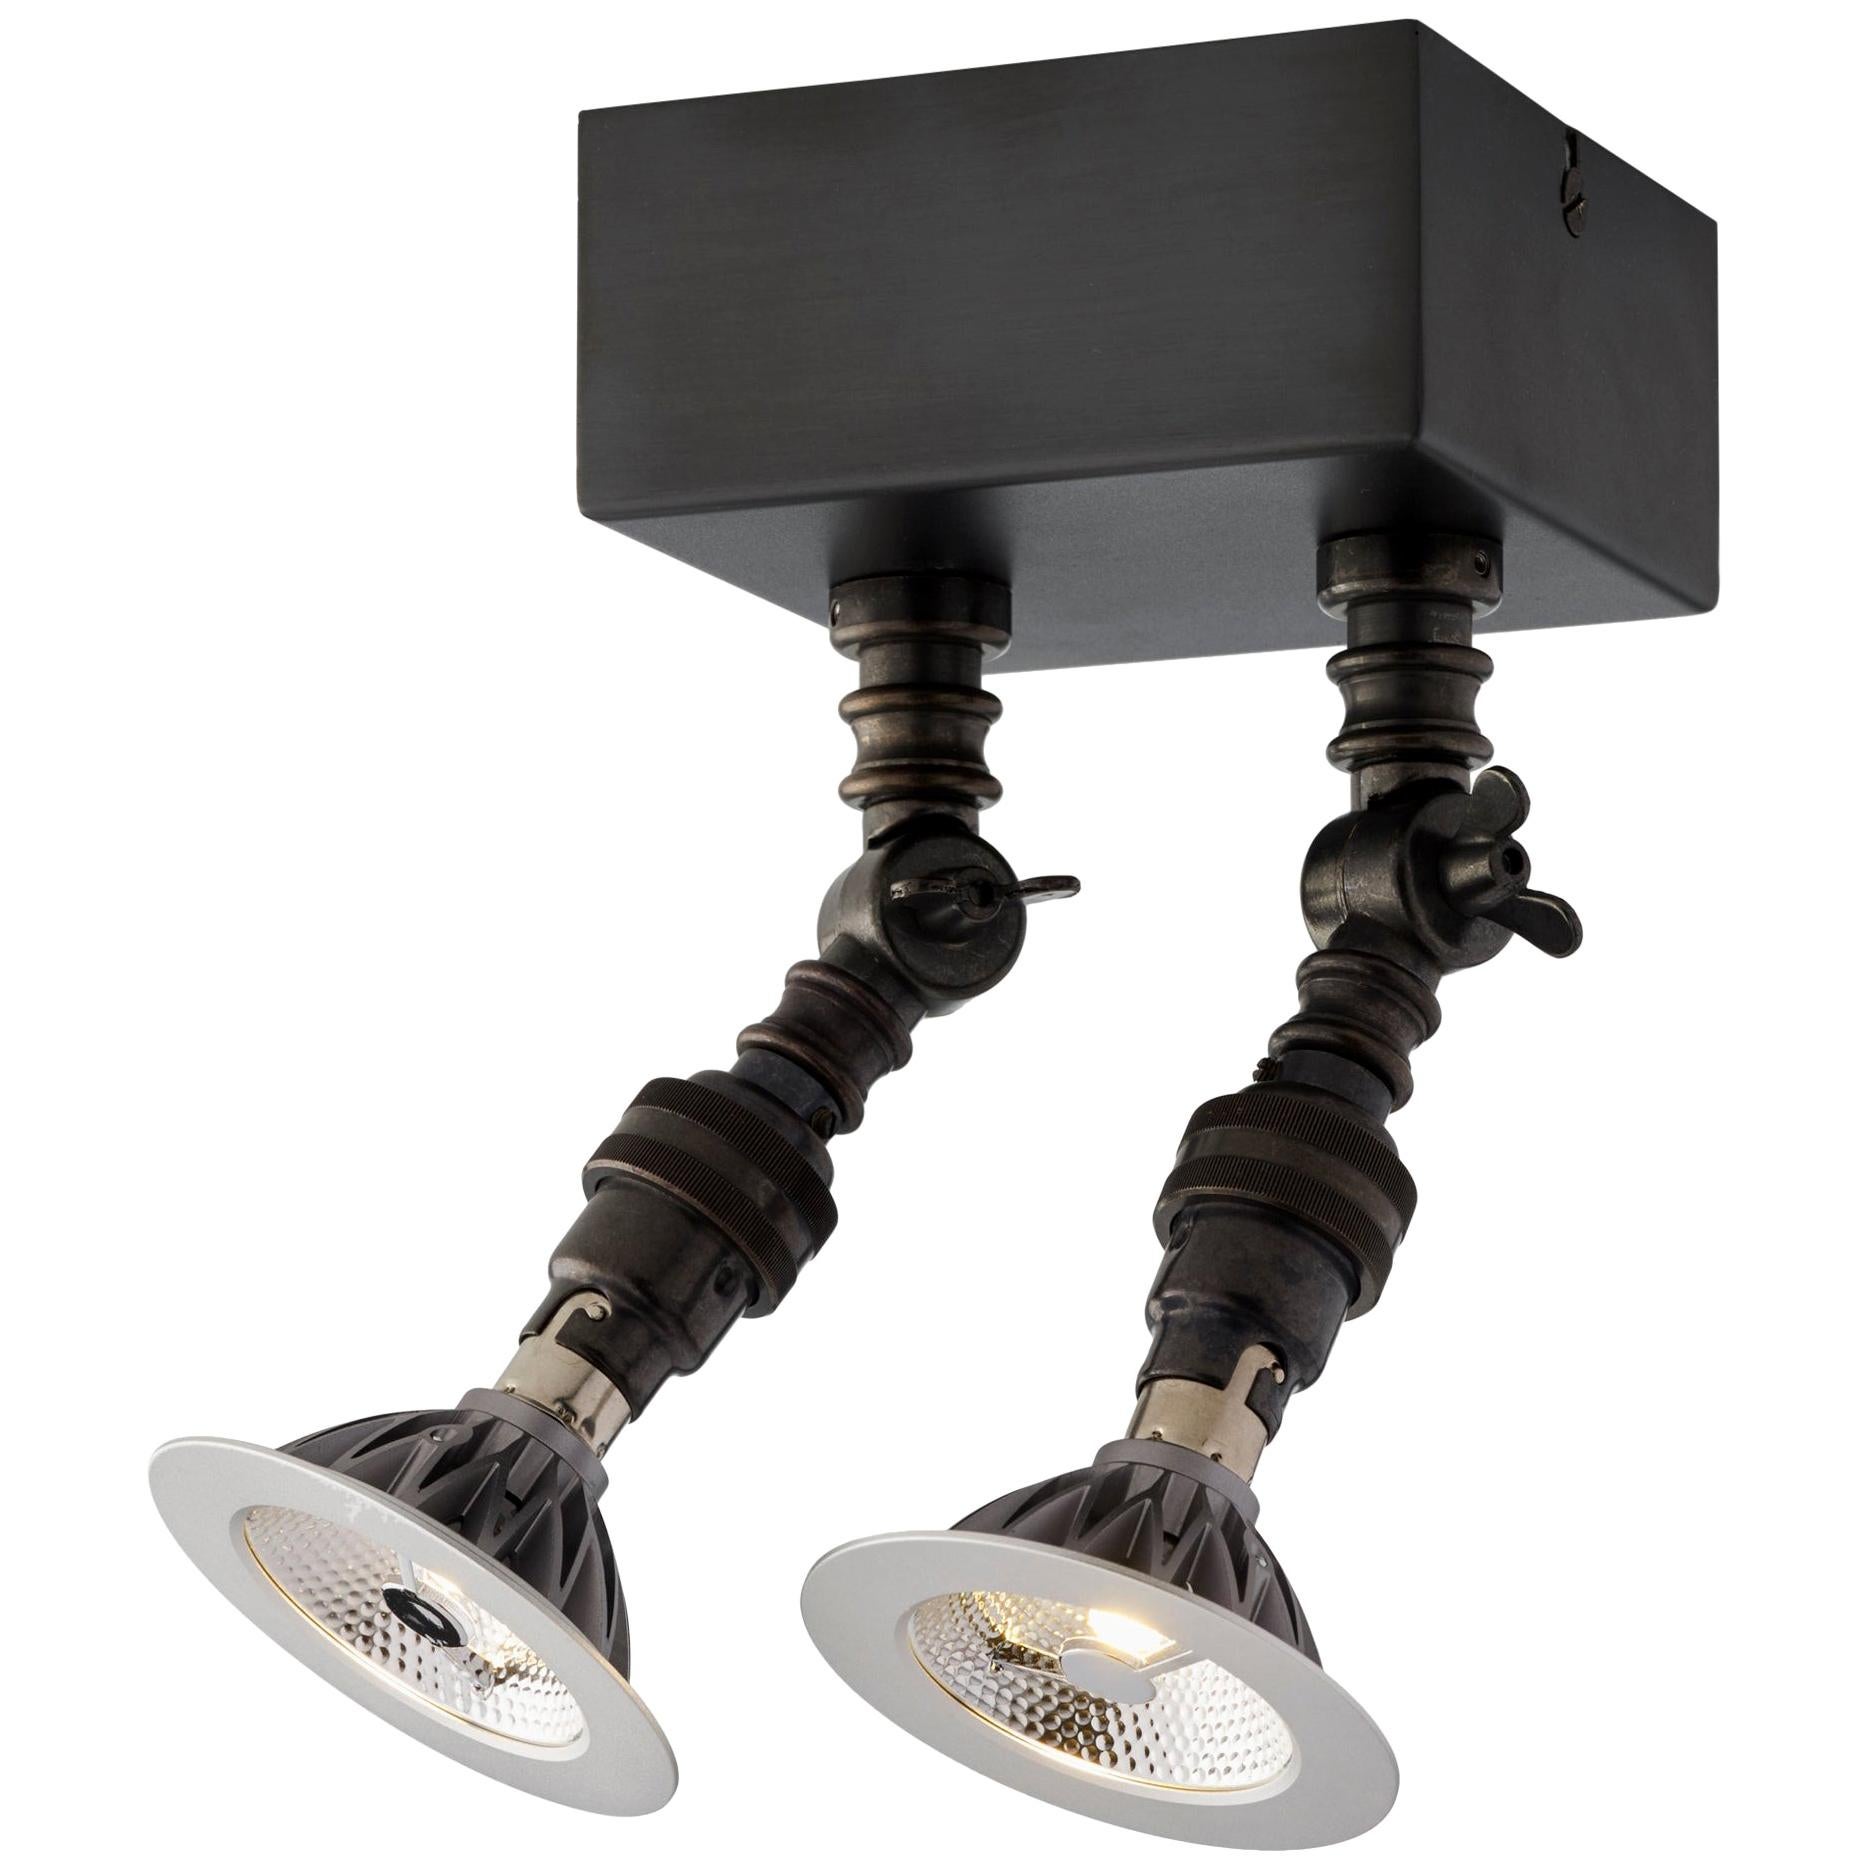 Tekna Lilley Spot Twin 12V Spot Light with Dark Bronze Finish For Sale